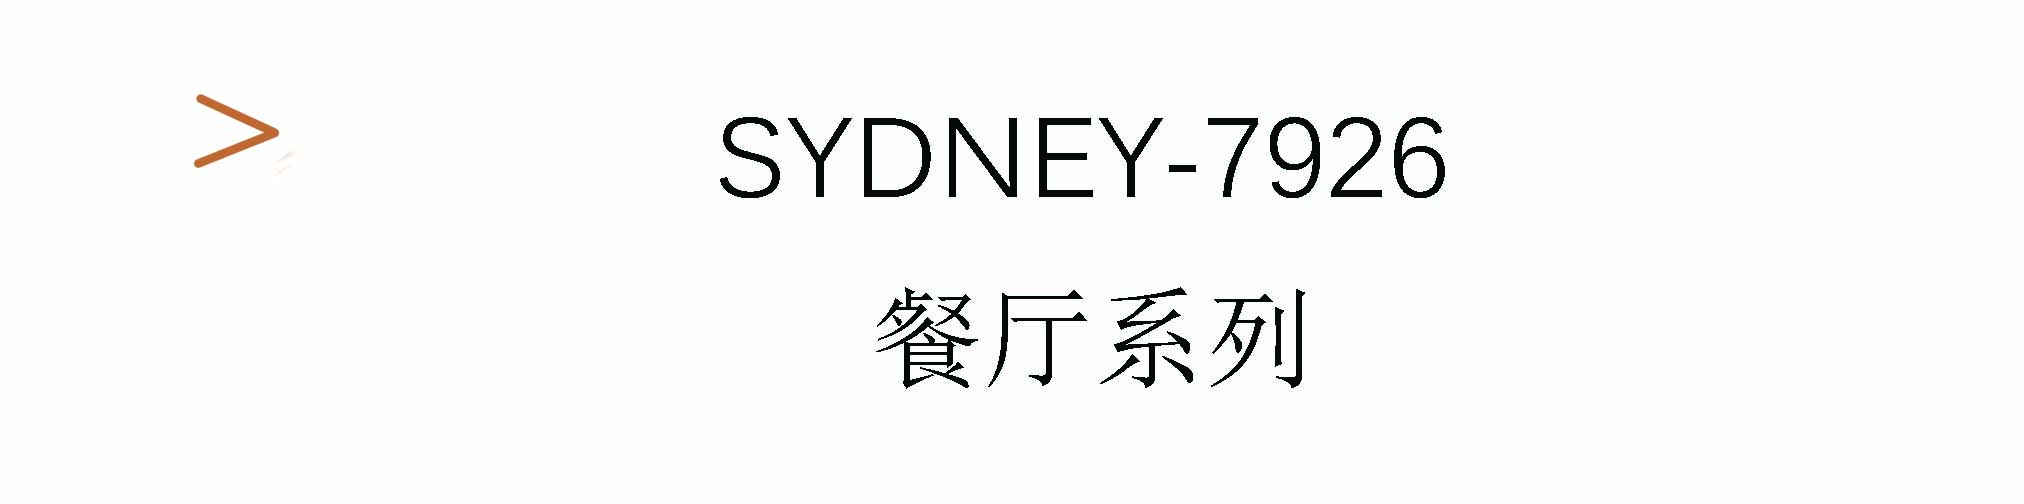 Sydney-7926